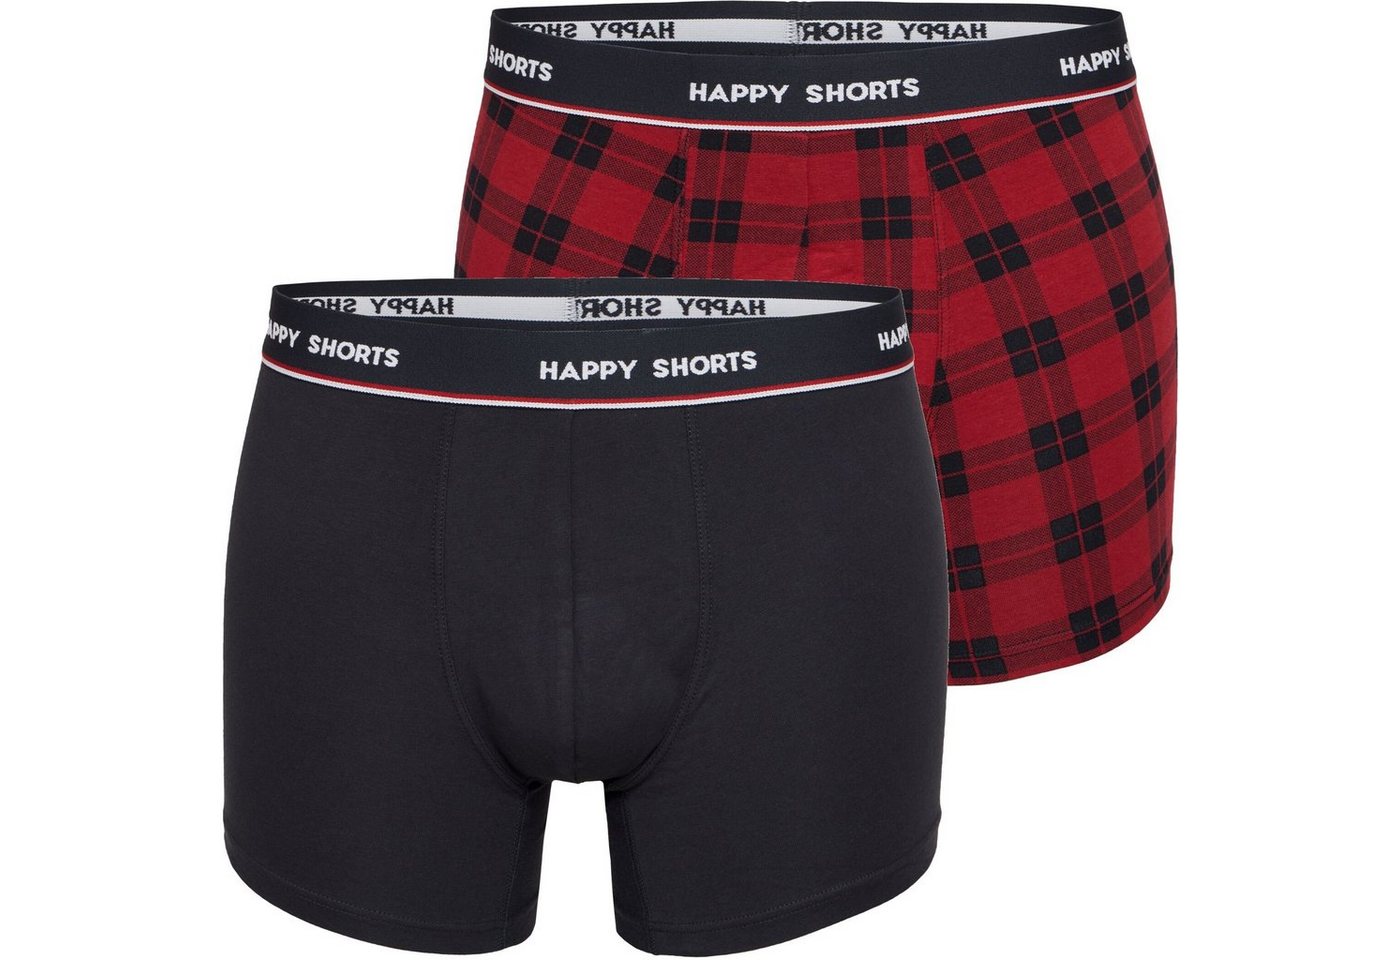 HAPPY SHORTS Trunk 2 Happy Shorts Jersey Trunk Herren Boxershorts Boxer Pant Rot Kariert (1-St) von HAPPY SHORTS